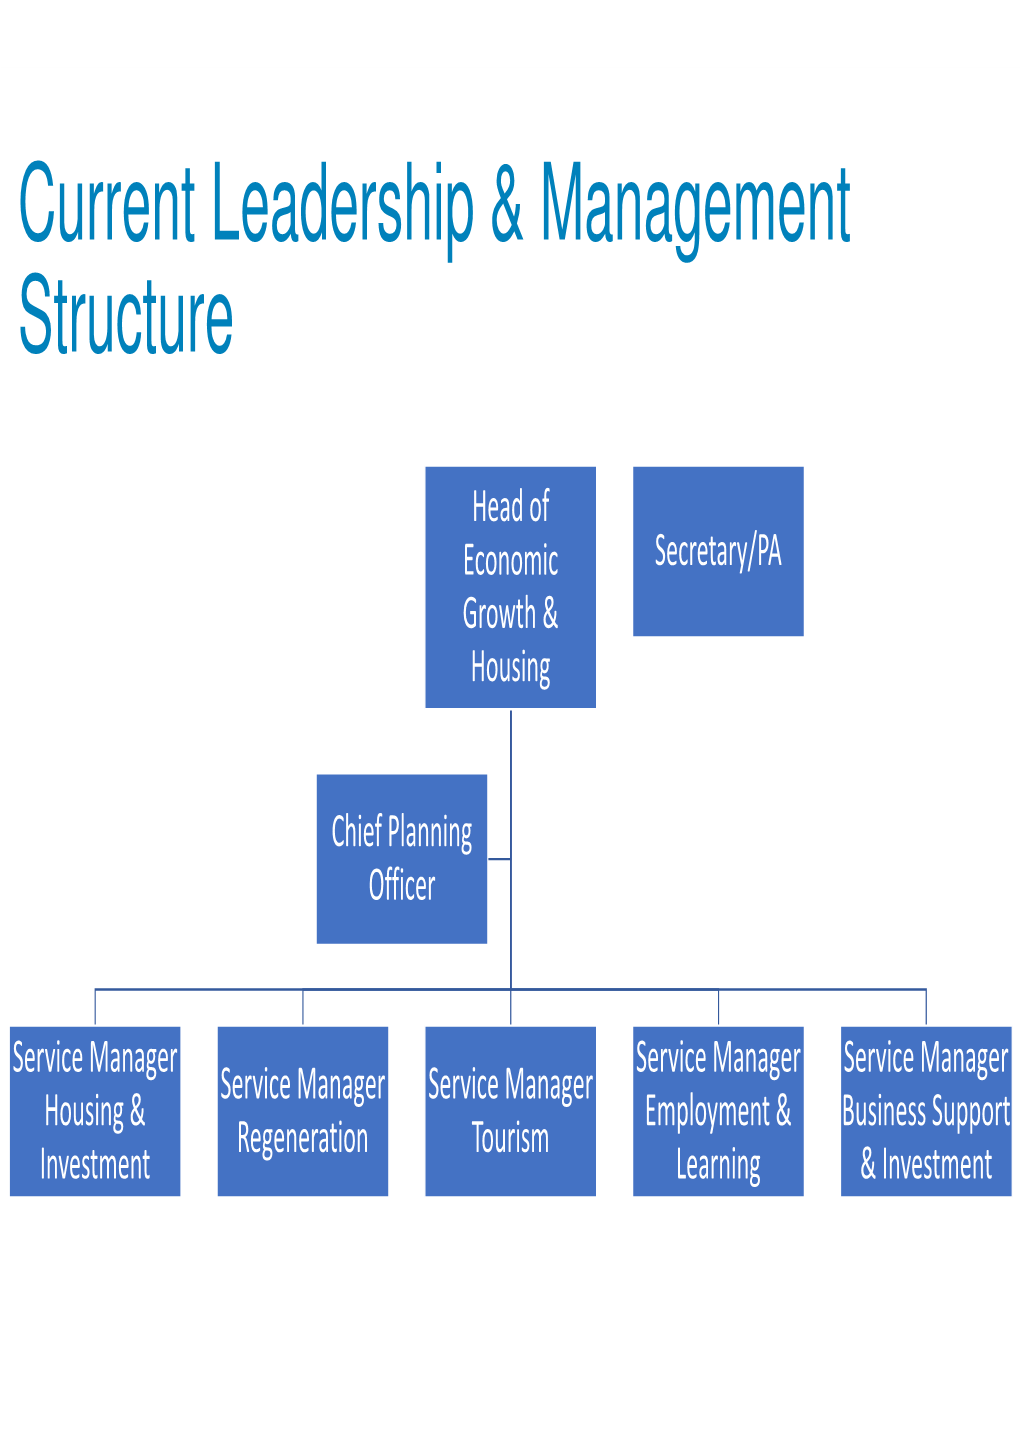 Current Leadership & Management Structure